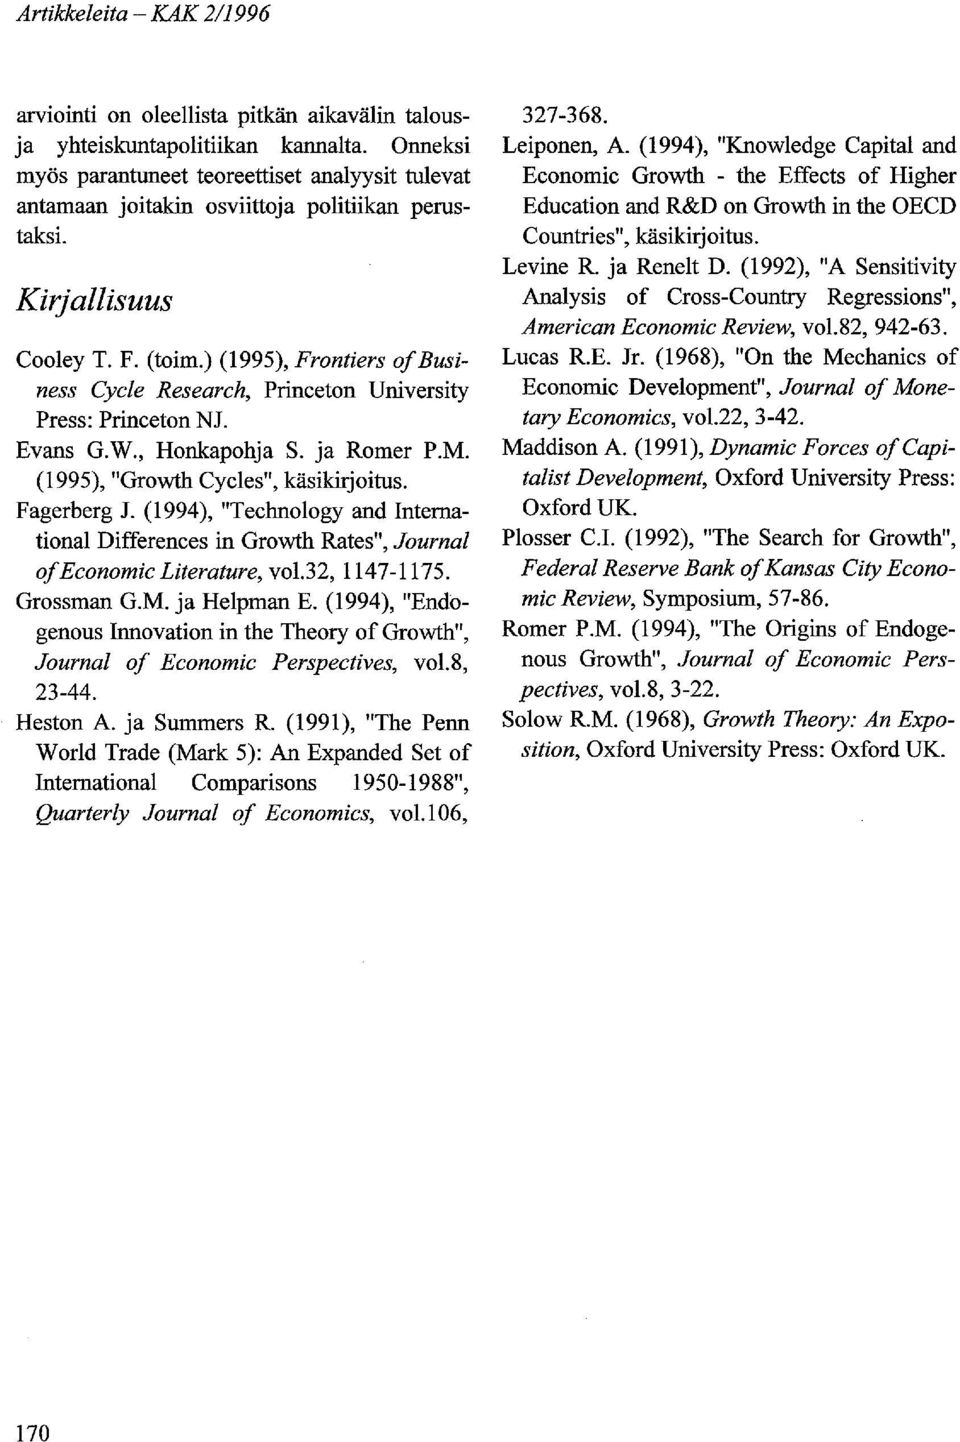 ) (1995), Frontiers of Business Cycle Research, Princeton University Press: Princeton Nl Evans G.W., Honkapohja S. ja Romer P.M. (1995), "Growth Cycles", käsikirjoitus. Fagerberg J.